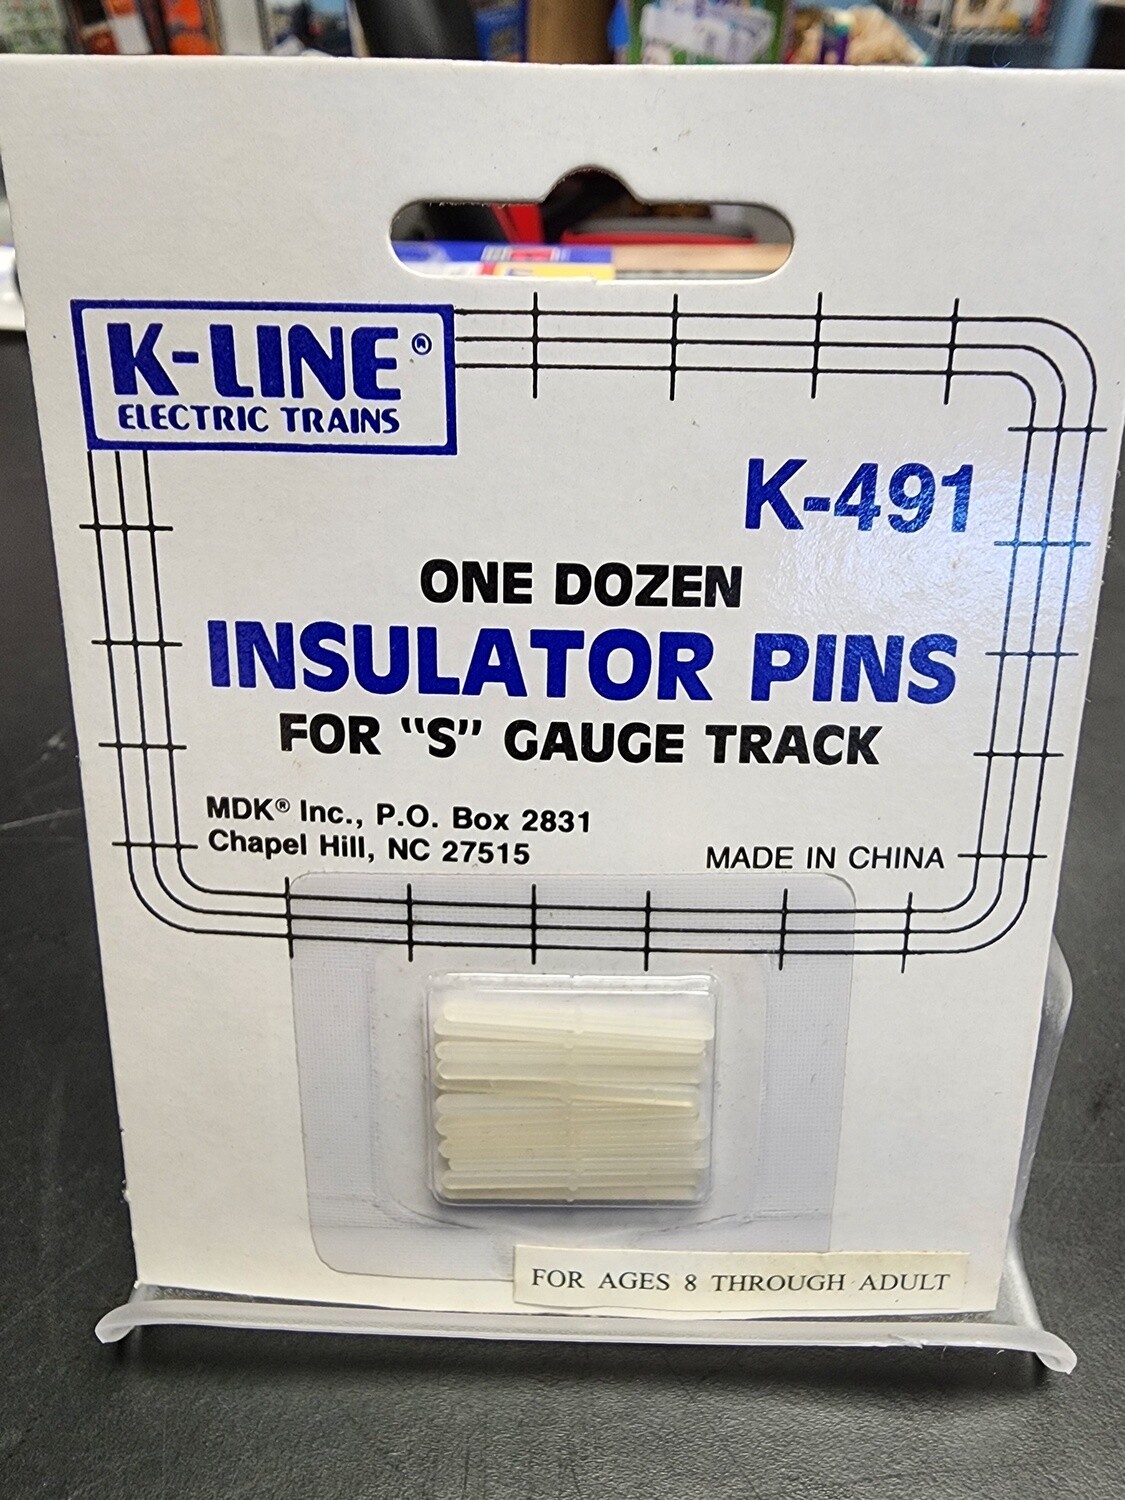 K-Line K-491 Insulator Pins